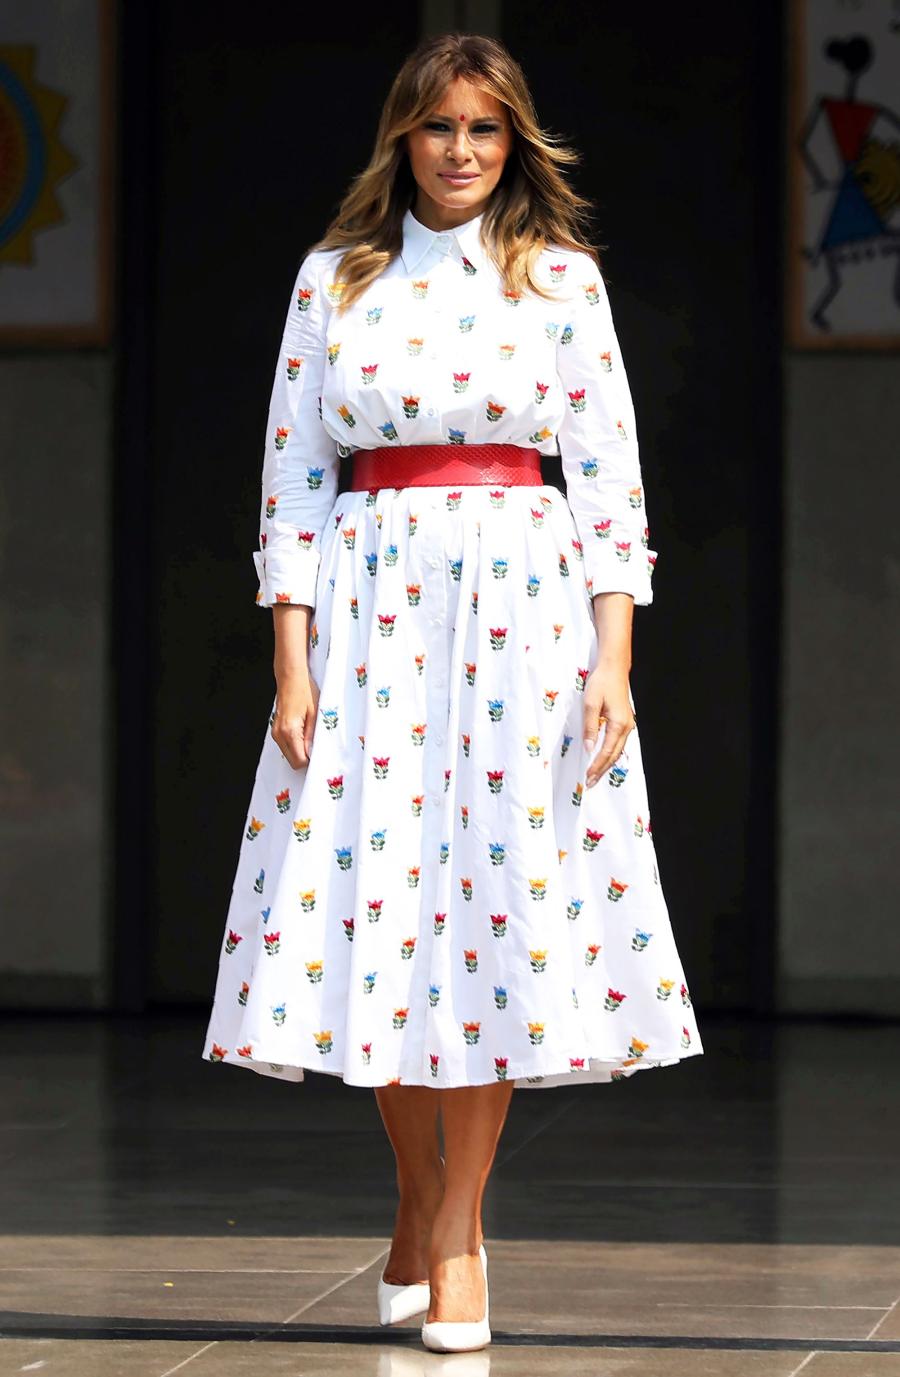 Melania Trump Embroidered Dress February 25, 2020